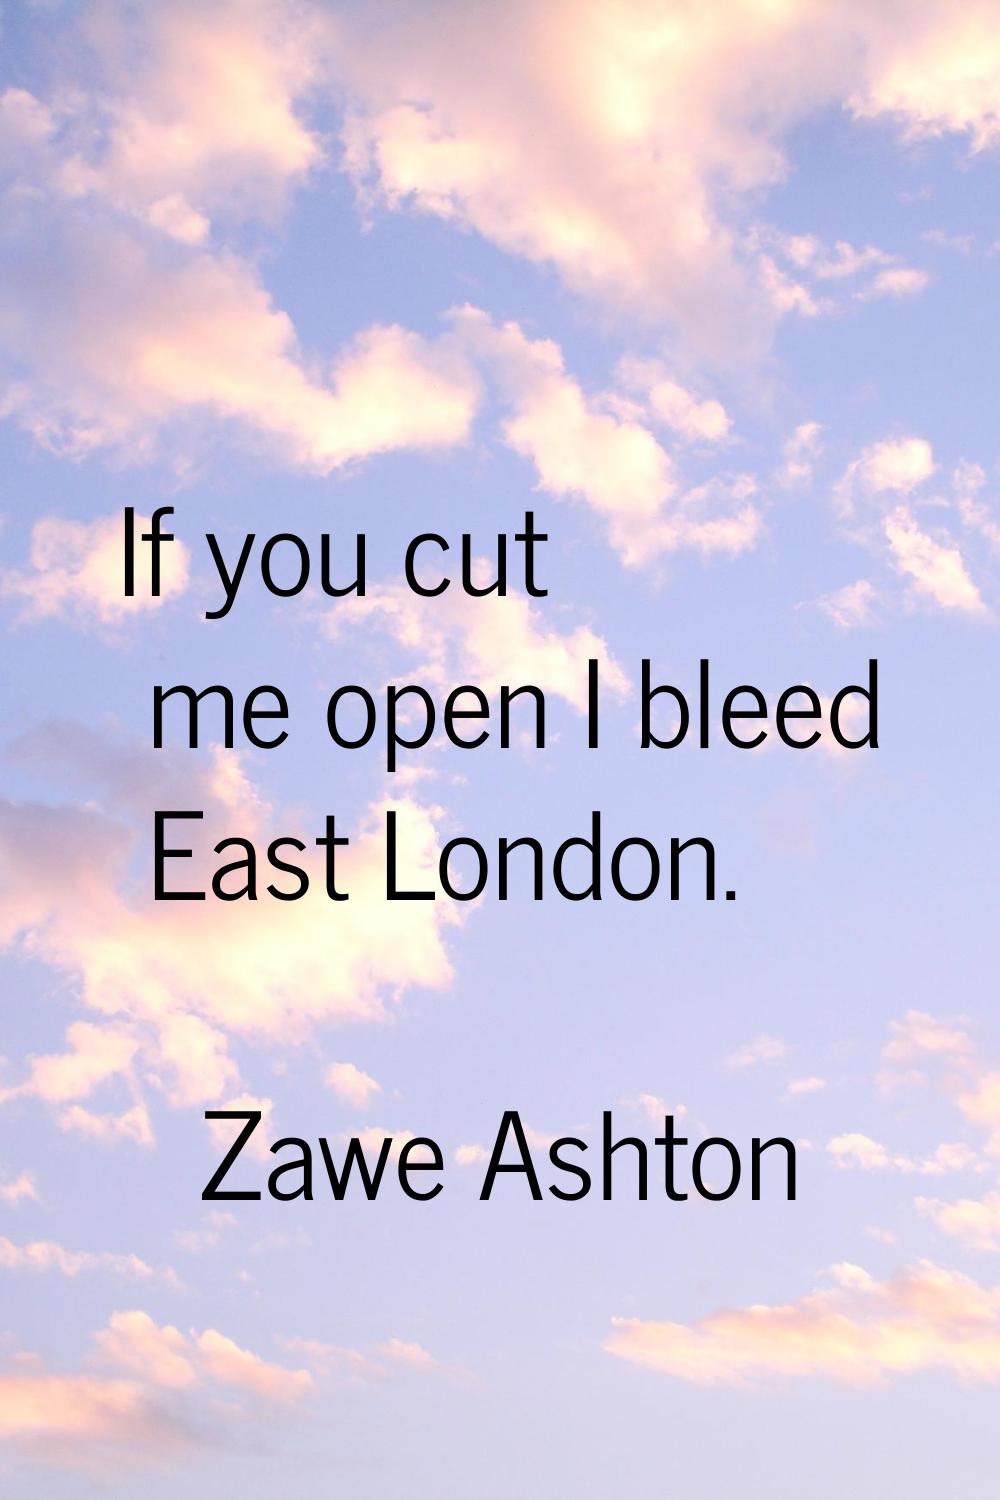 If you cut me open I bleed East London.